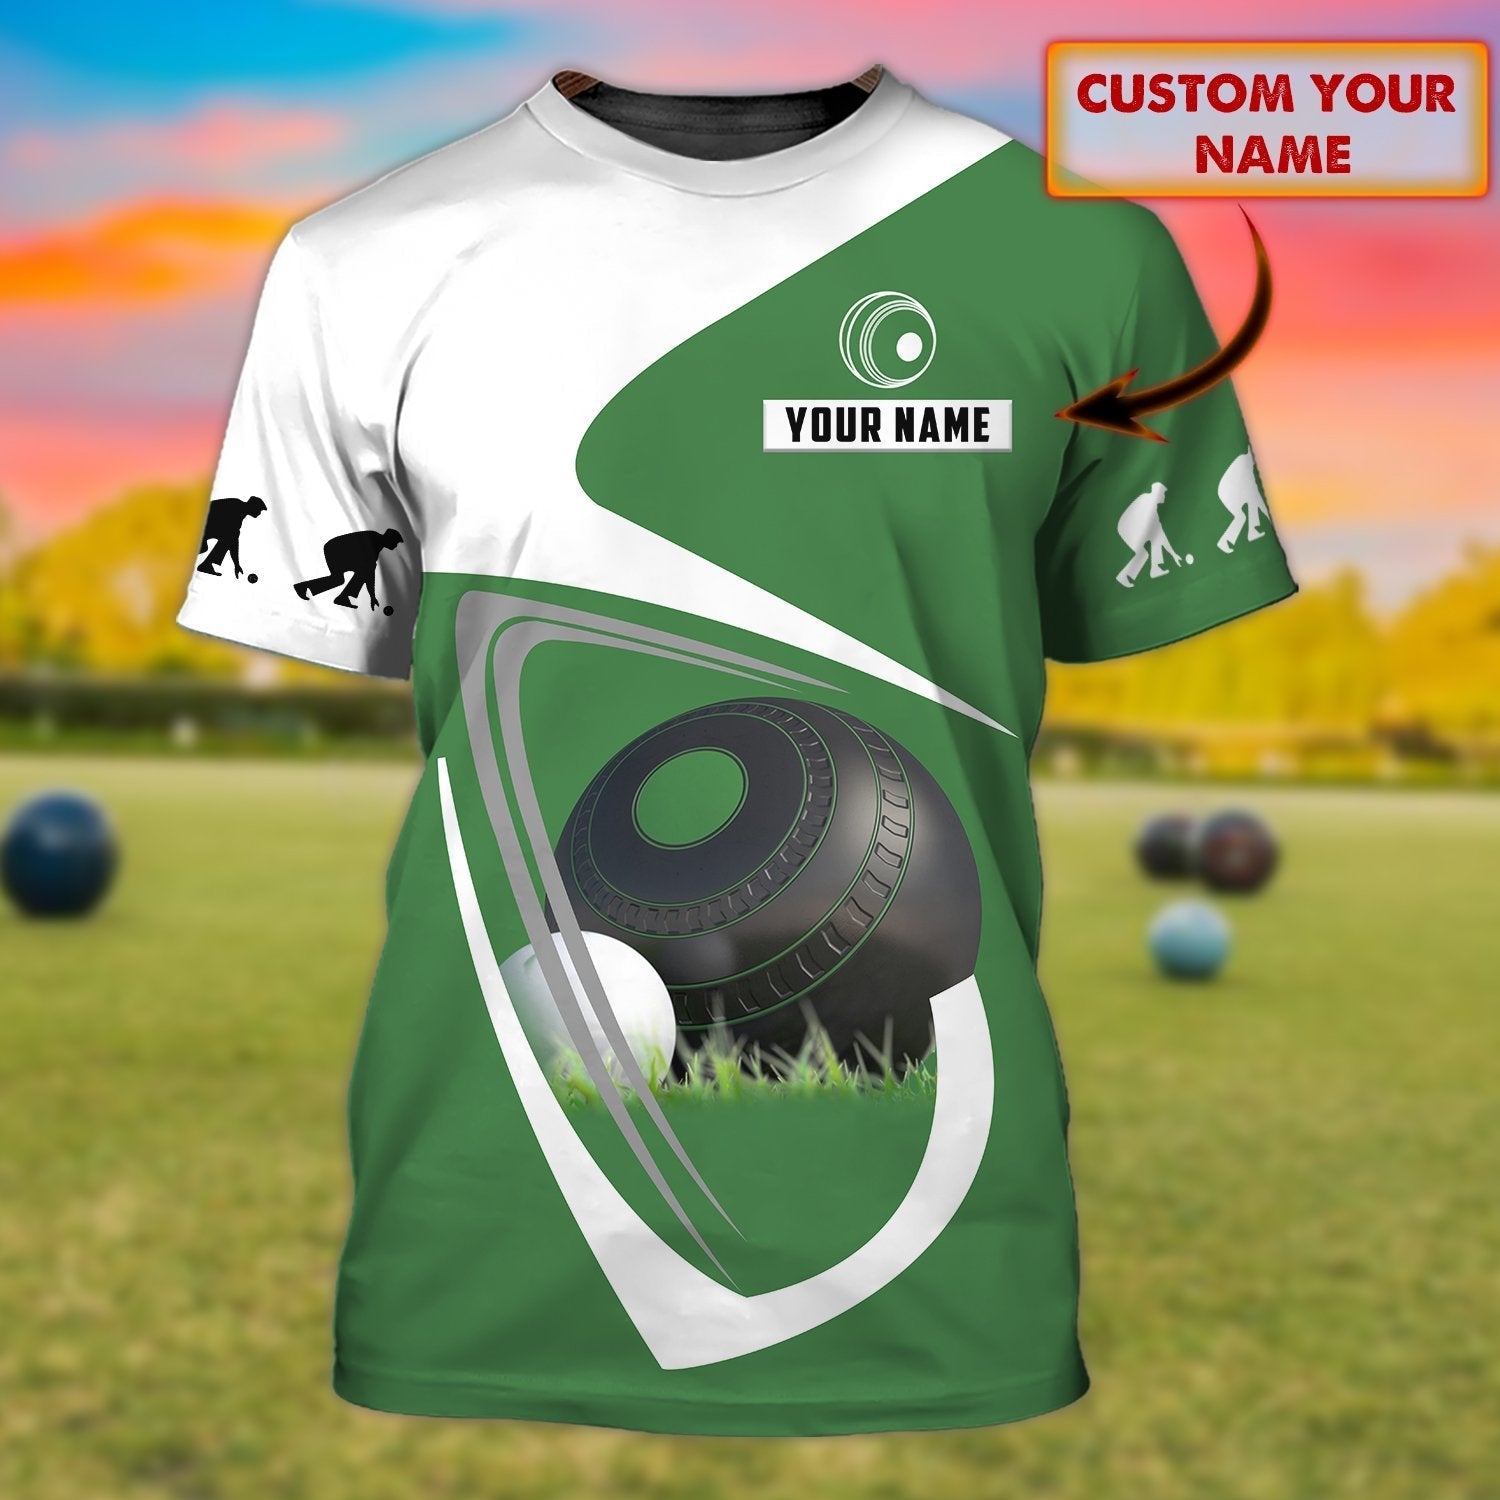 Custom Lawn Bowls T Shirt Lawnbowl Player Team Uniform Present Gift For Lawn Bowl Lover